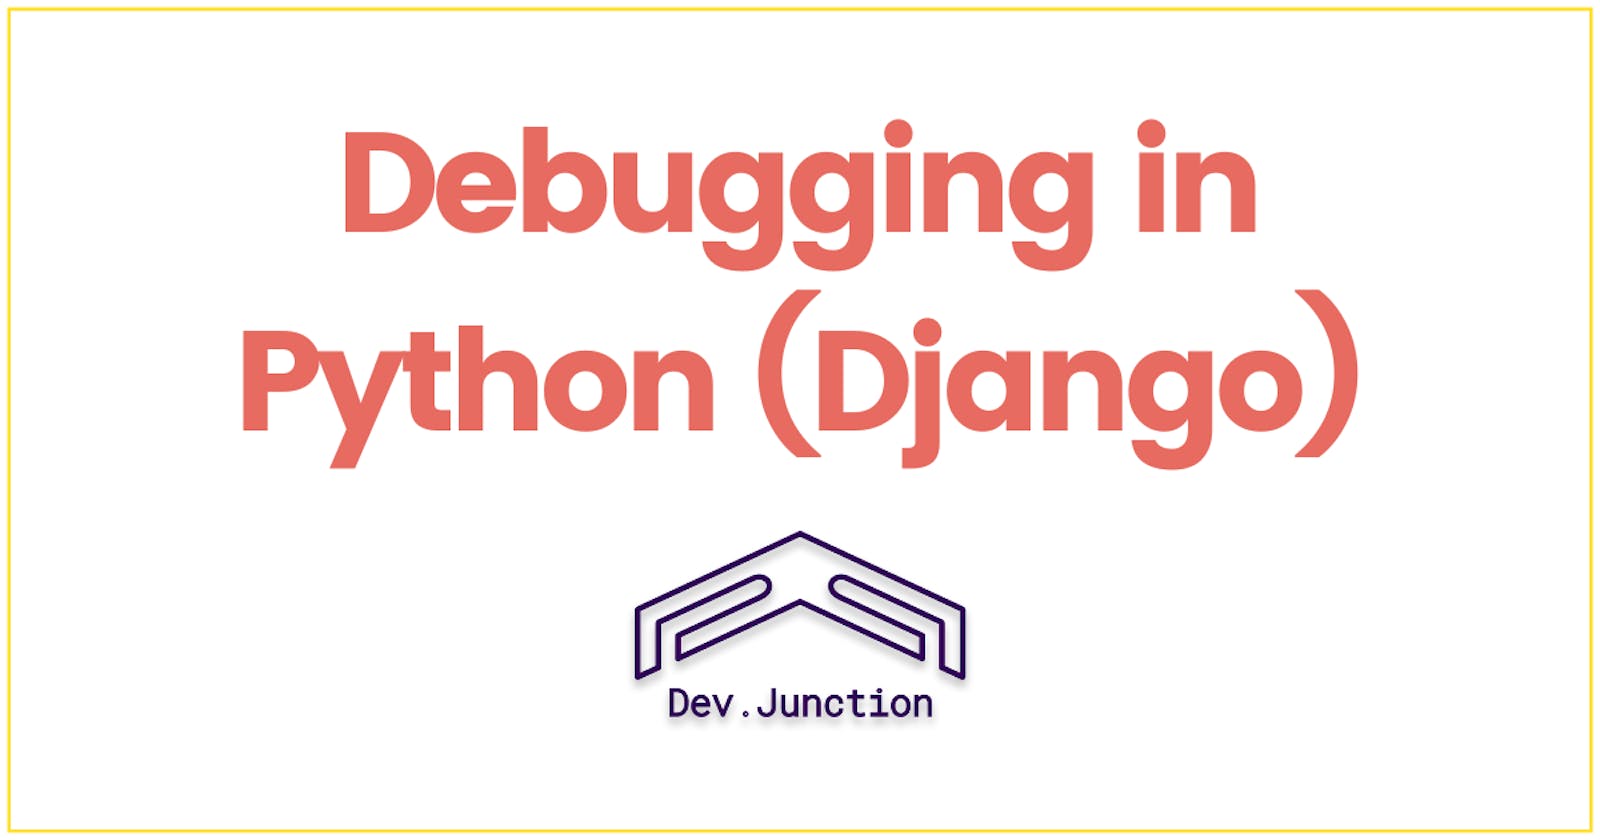 How to debug Python (Django) using `breakpoint()` function?